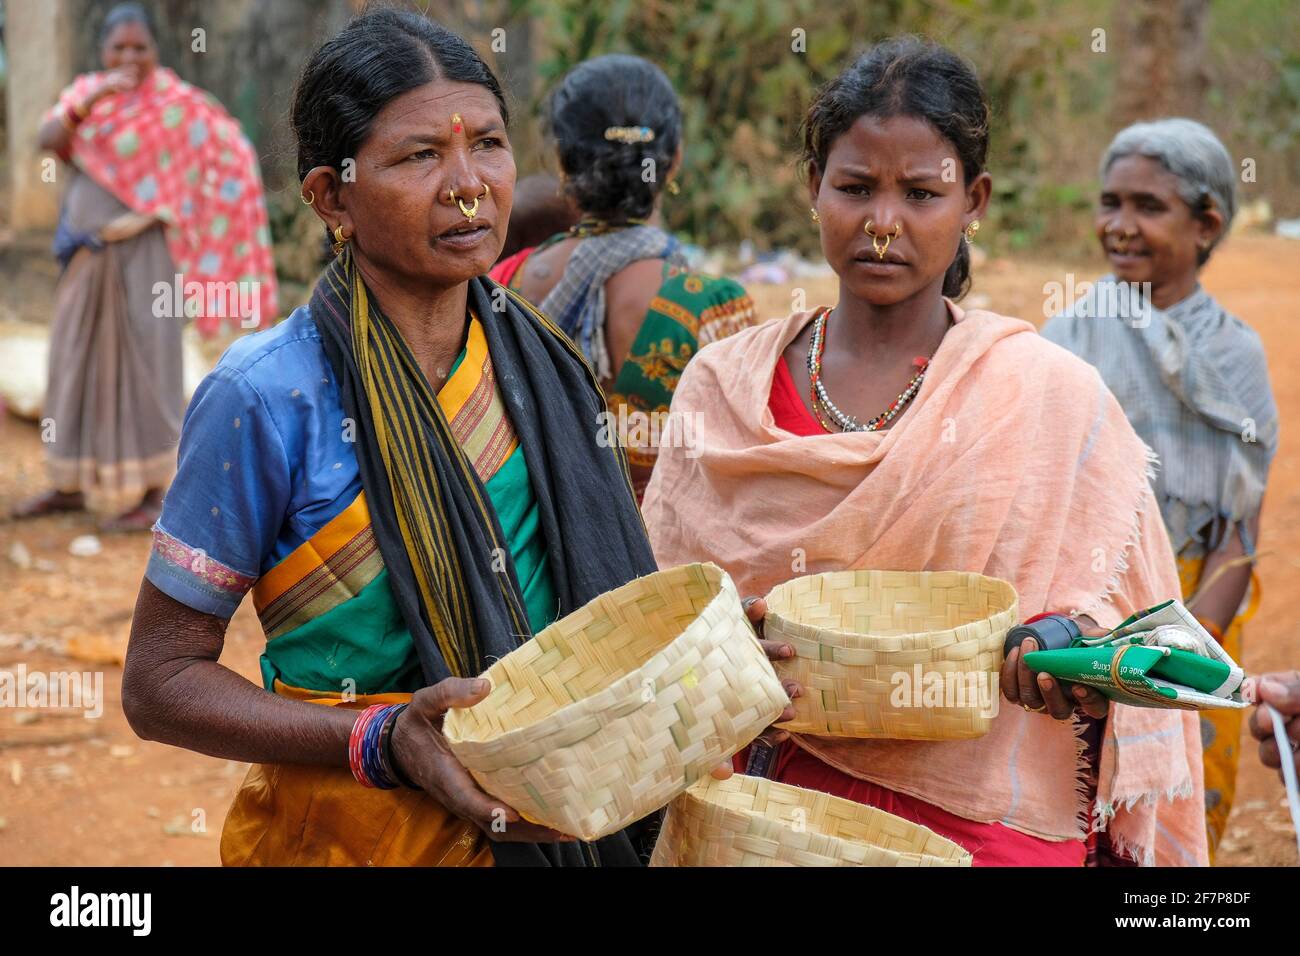 Laxmipur, India - February 2021: Adivasi women from the Kondh tribe buying cane baskets in the Laxmipur market on February 20, 2021 in Odisha, India. Stock Photo